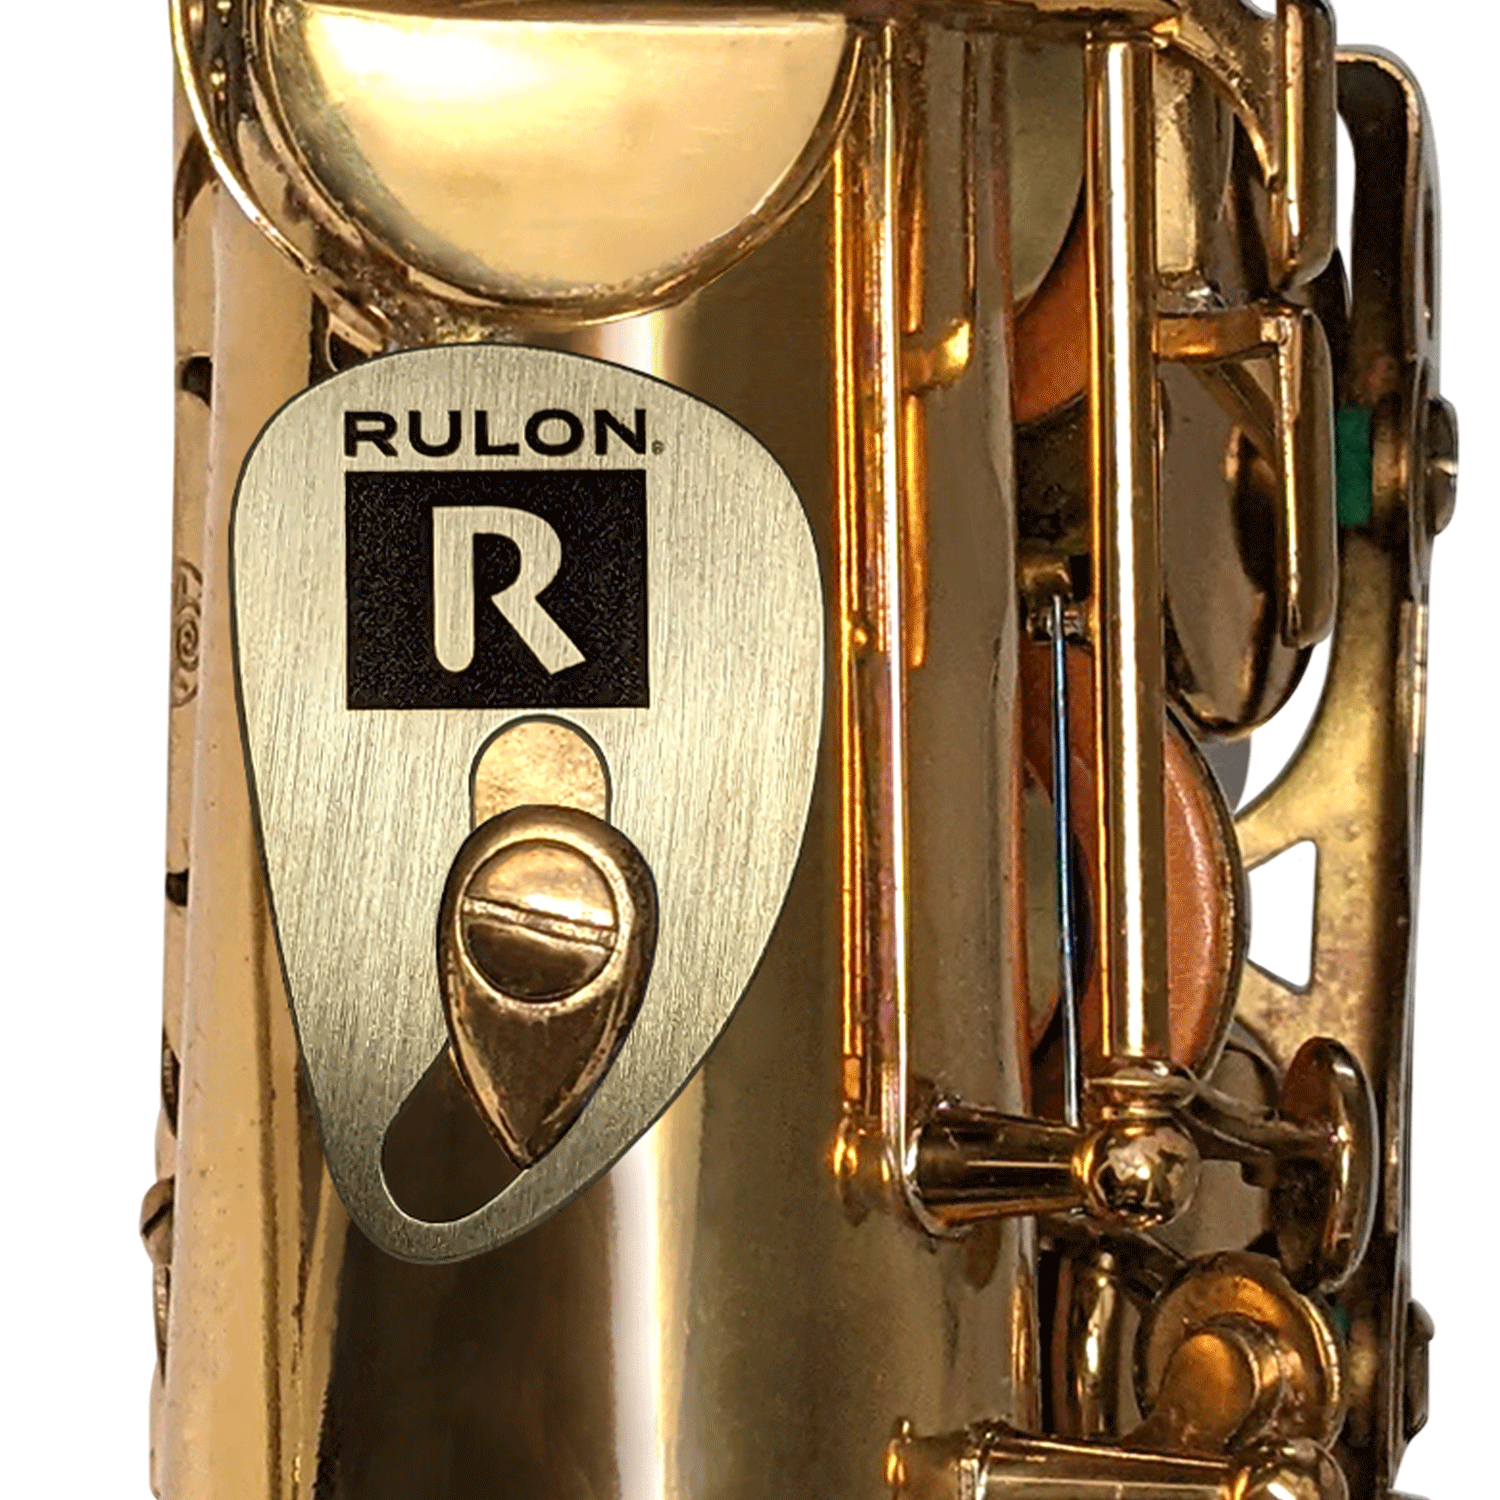 Brass saxophone thumb hook without hook, ergonomic comfort fits